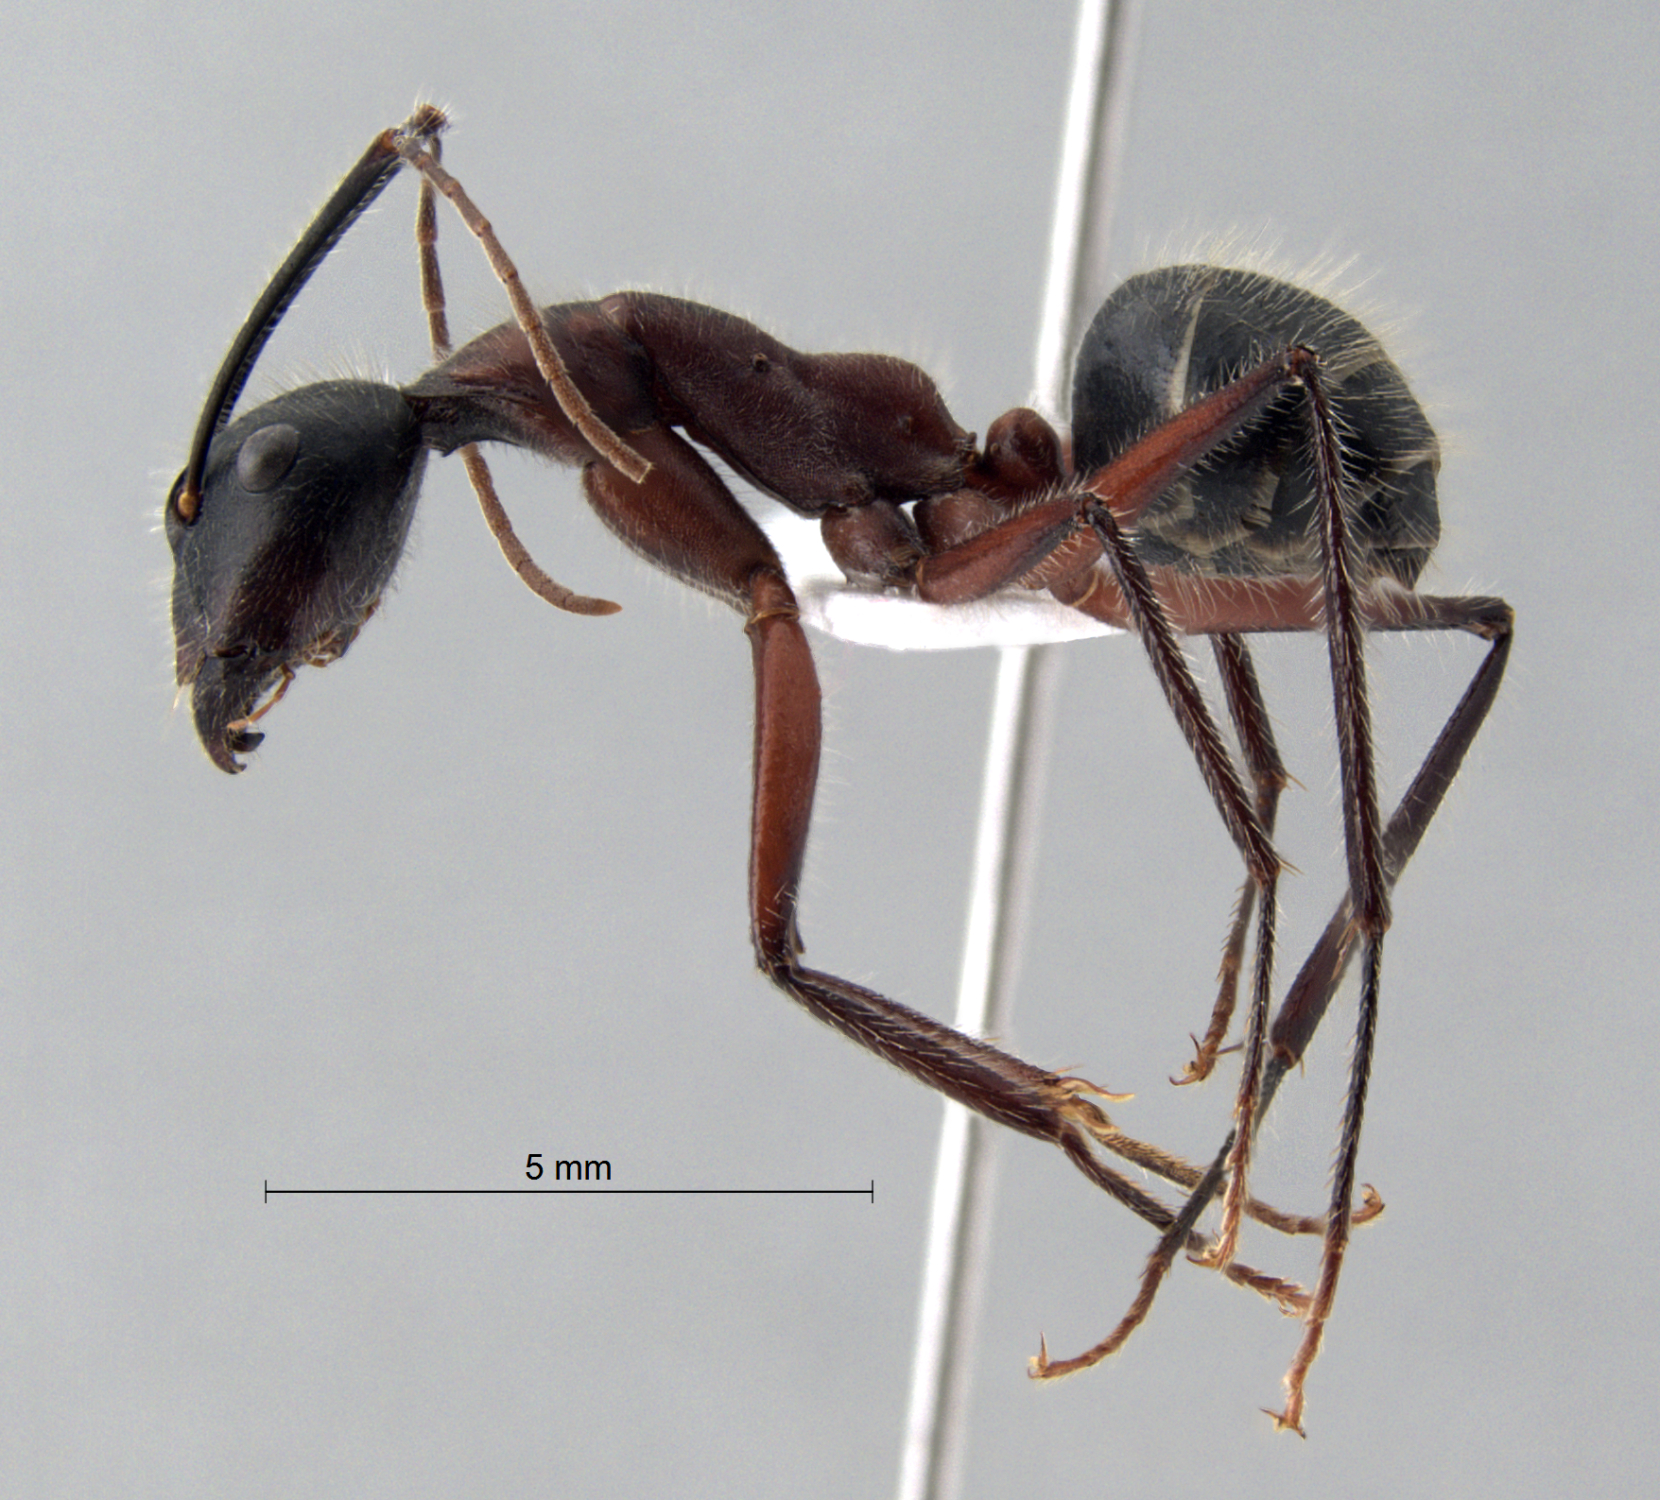  Camponotus innexus lateral